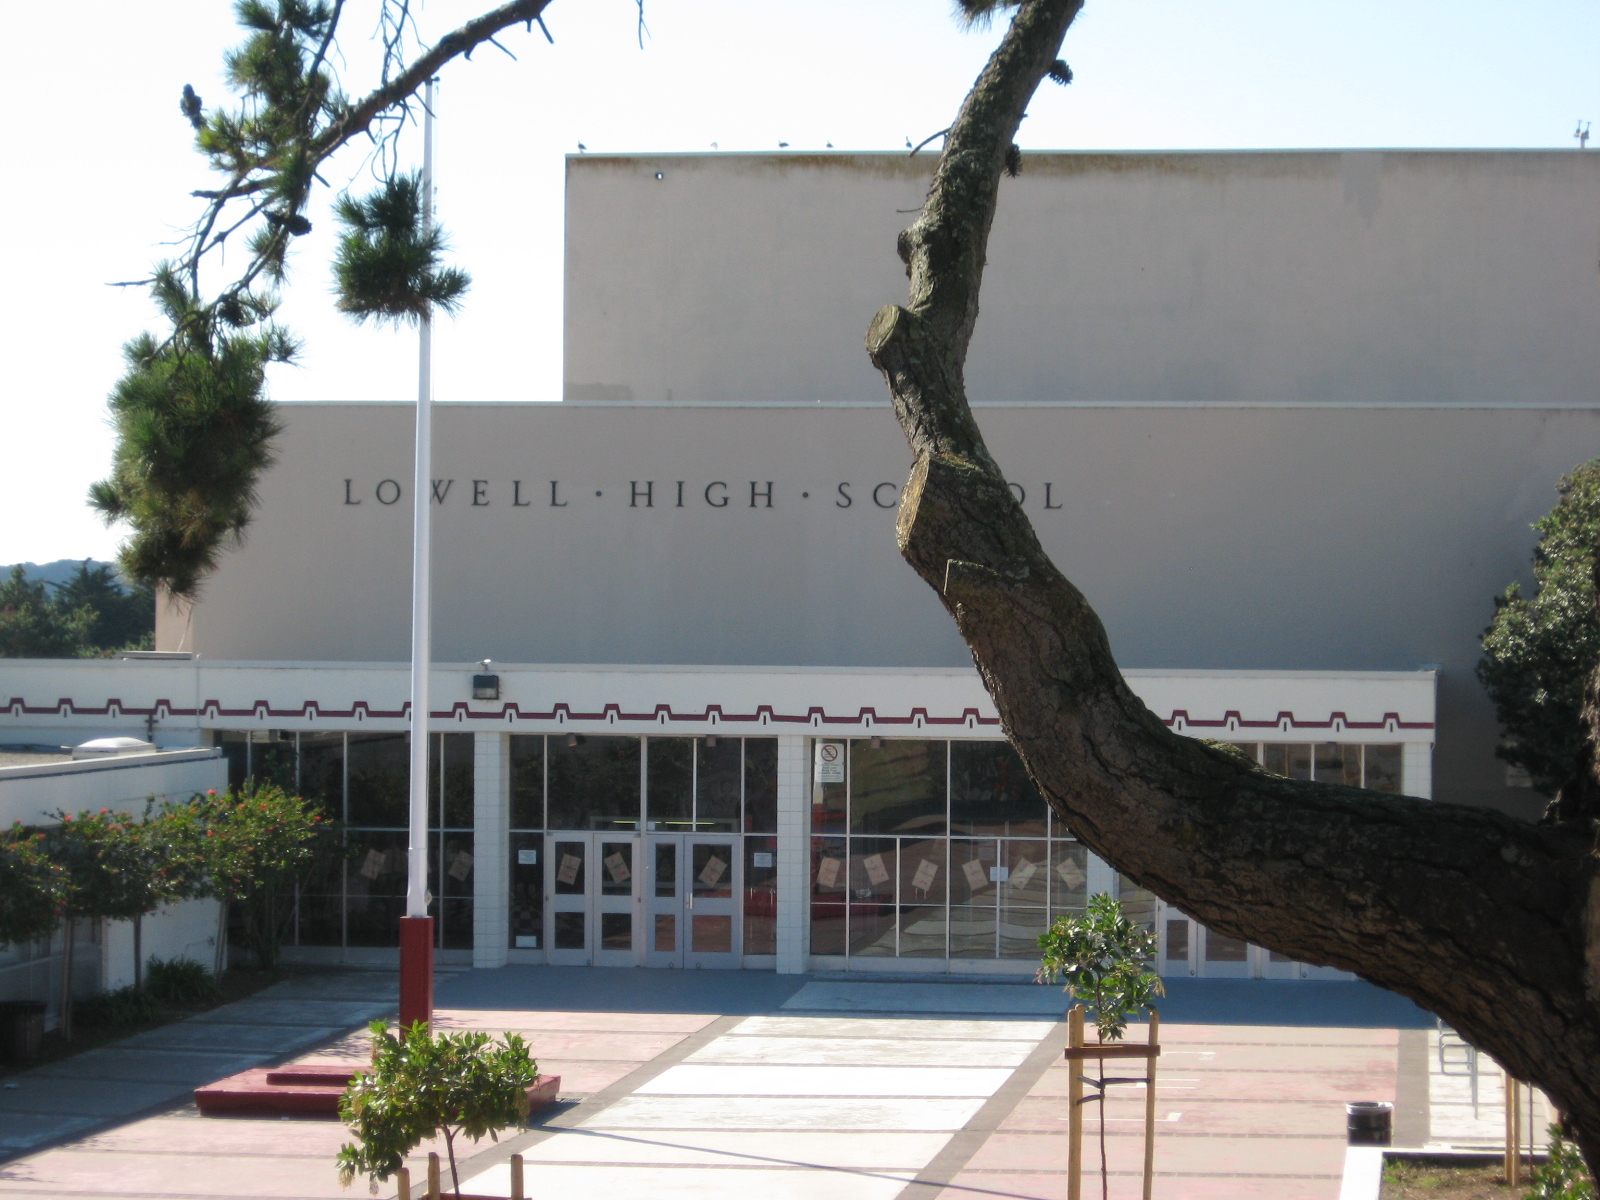 Top 100 Best High Schools 2013 – Lowell High School – Newsweek – 66/100